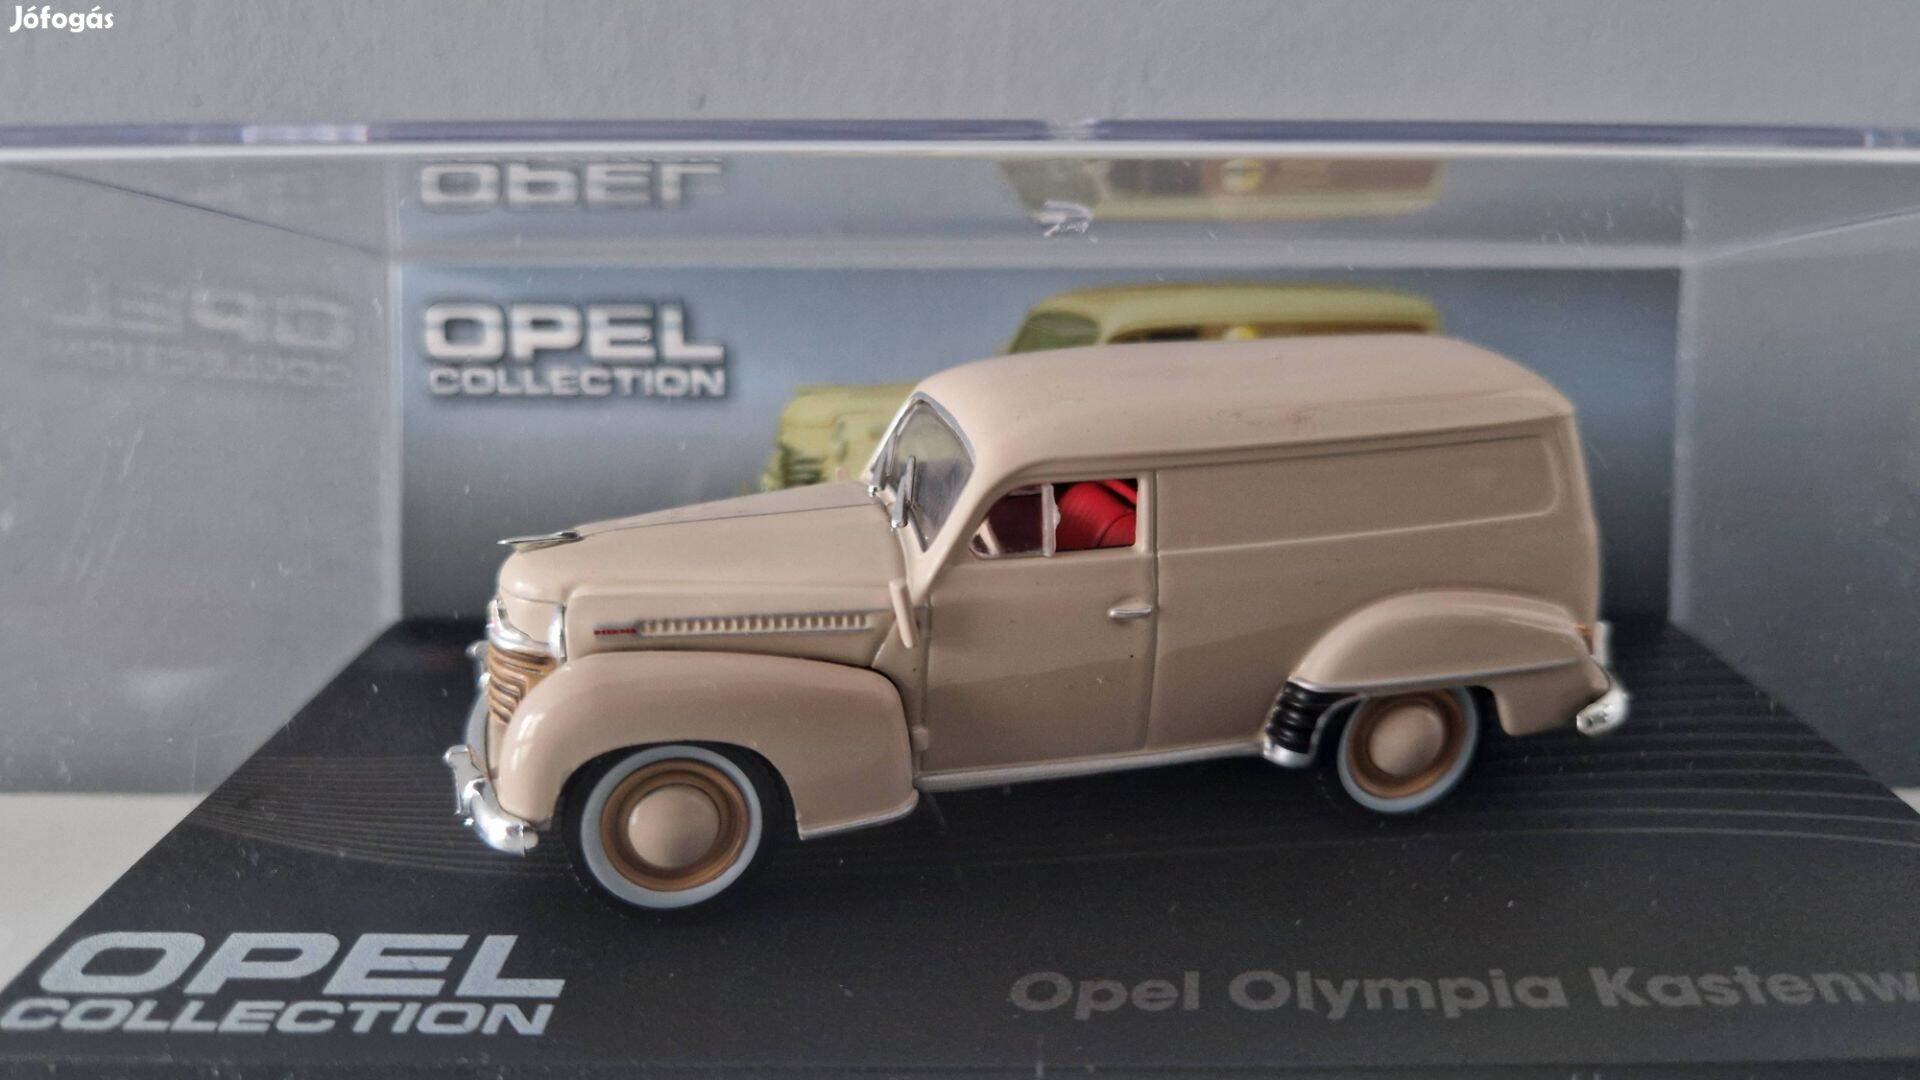 Opel Olympia Kastenwagen 1:43 1/43 modell Collection furgon Altaya